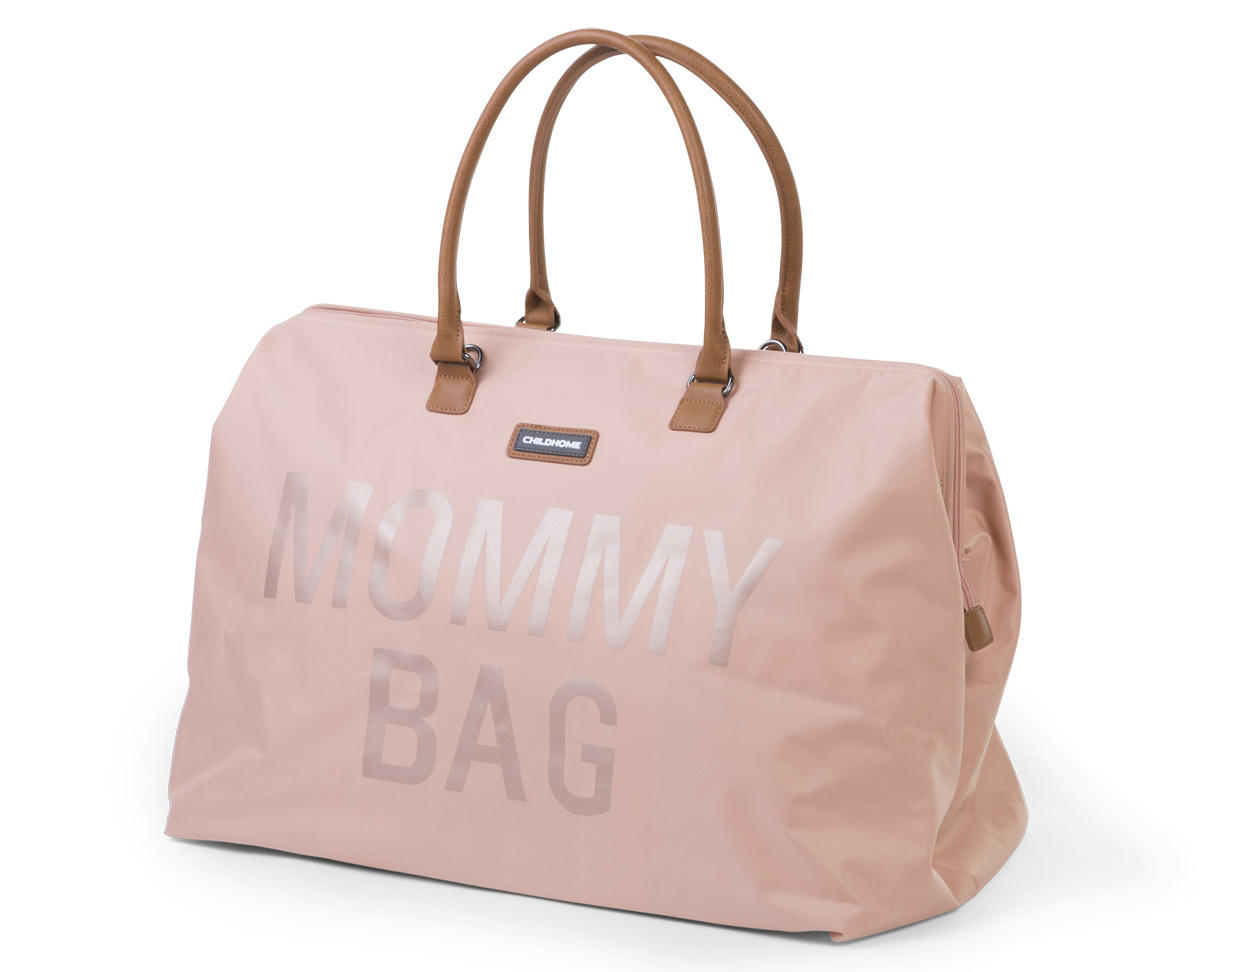 WICKELTASCHE  Childhome Mommy Bag   - Pink/Grau, Basics, Textil (30/55/40cm) - Childhome